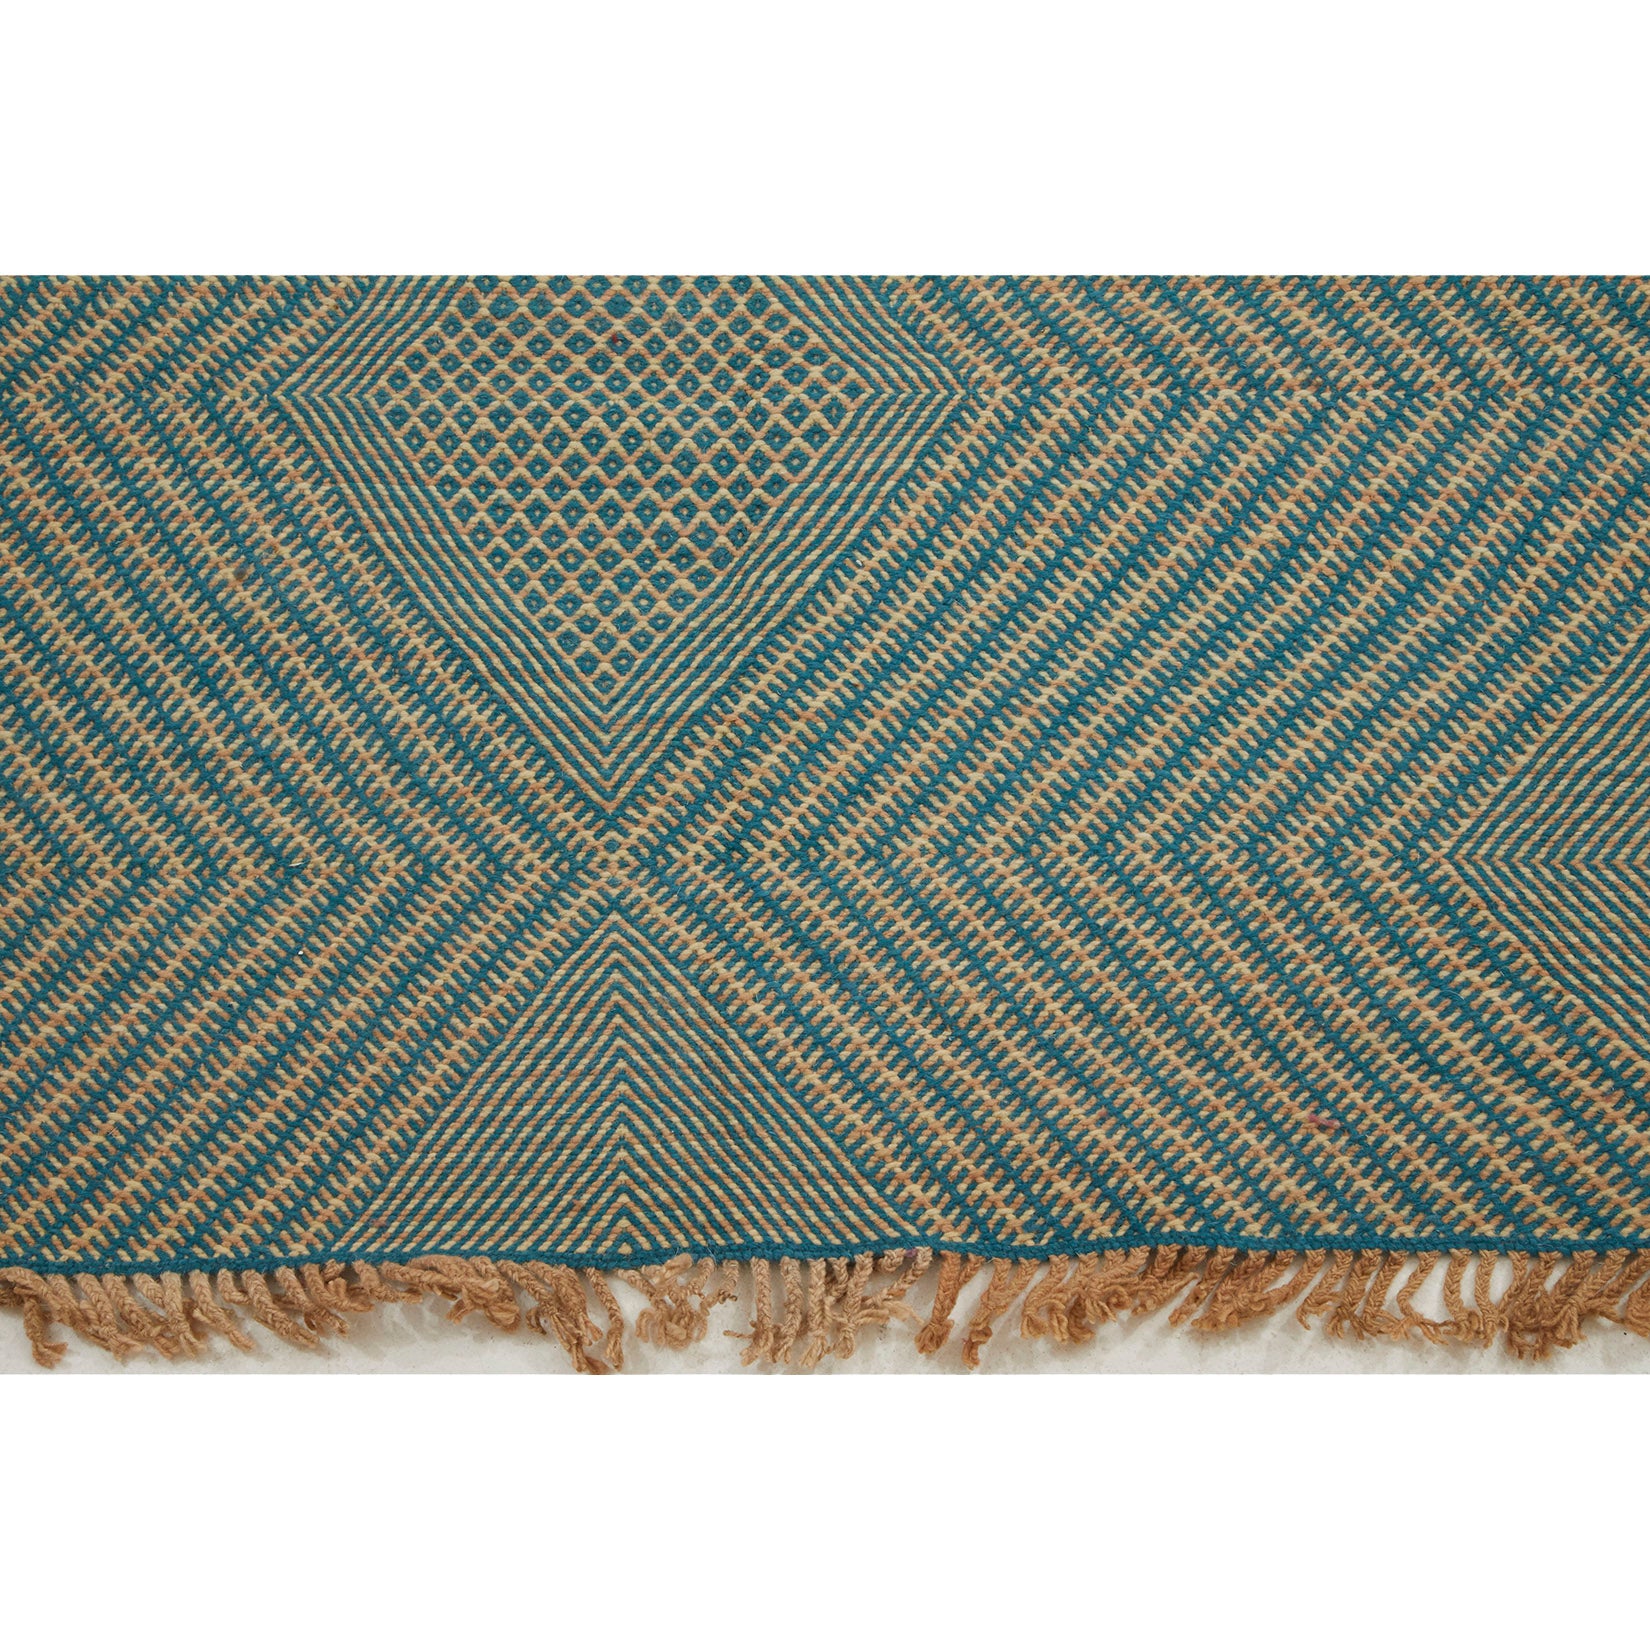 Boho chic Moroccan flatweave kilim area rug in blue ombré - Kantara | Moroccan Rugs